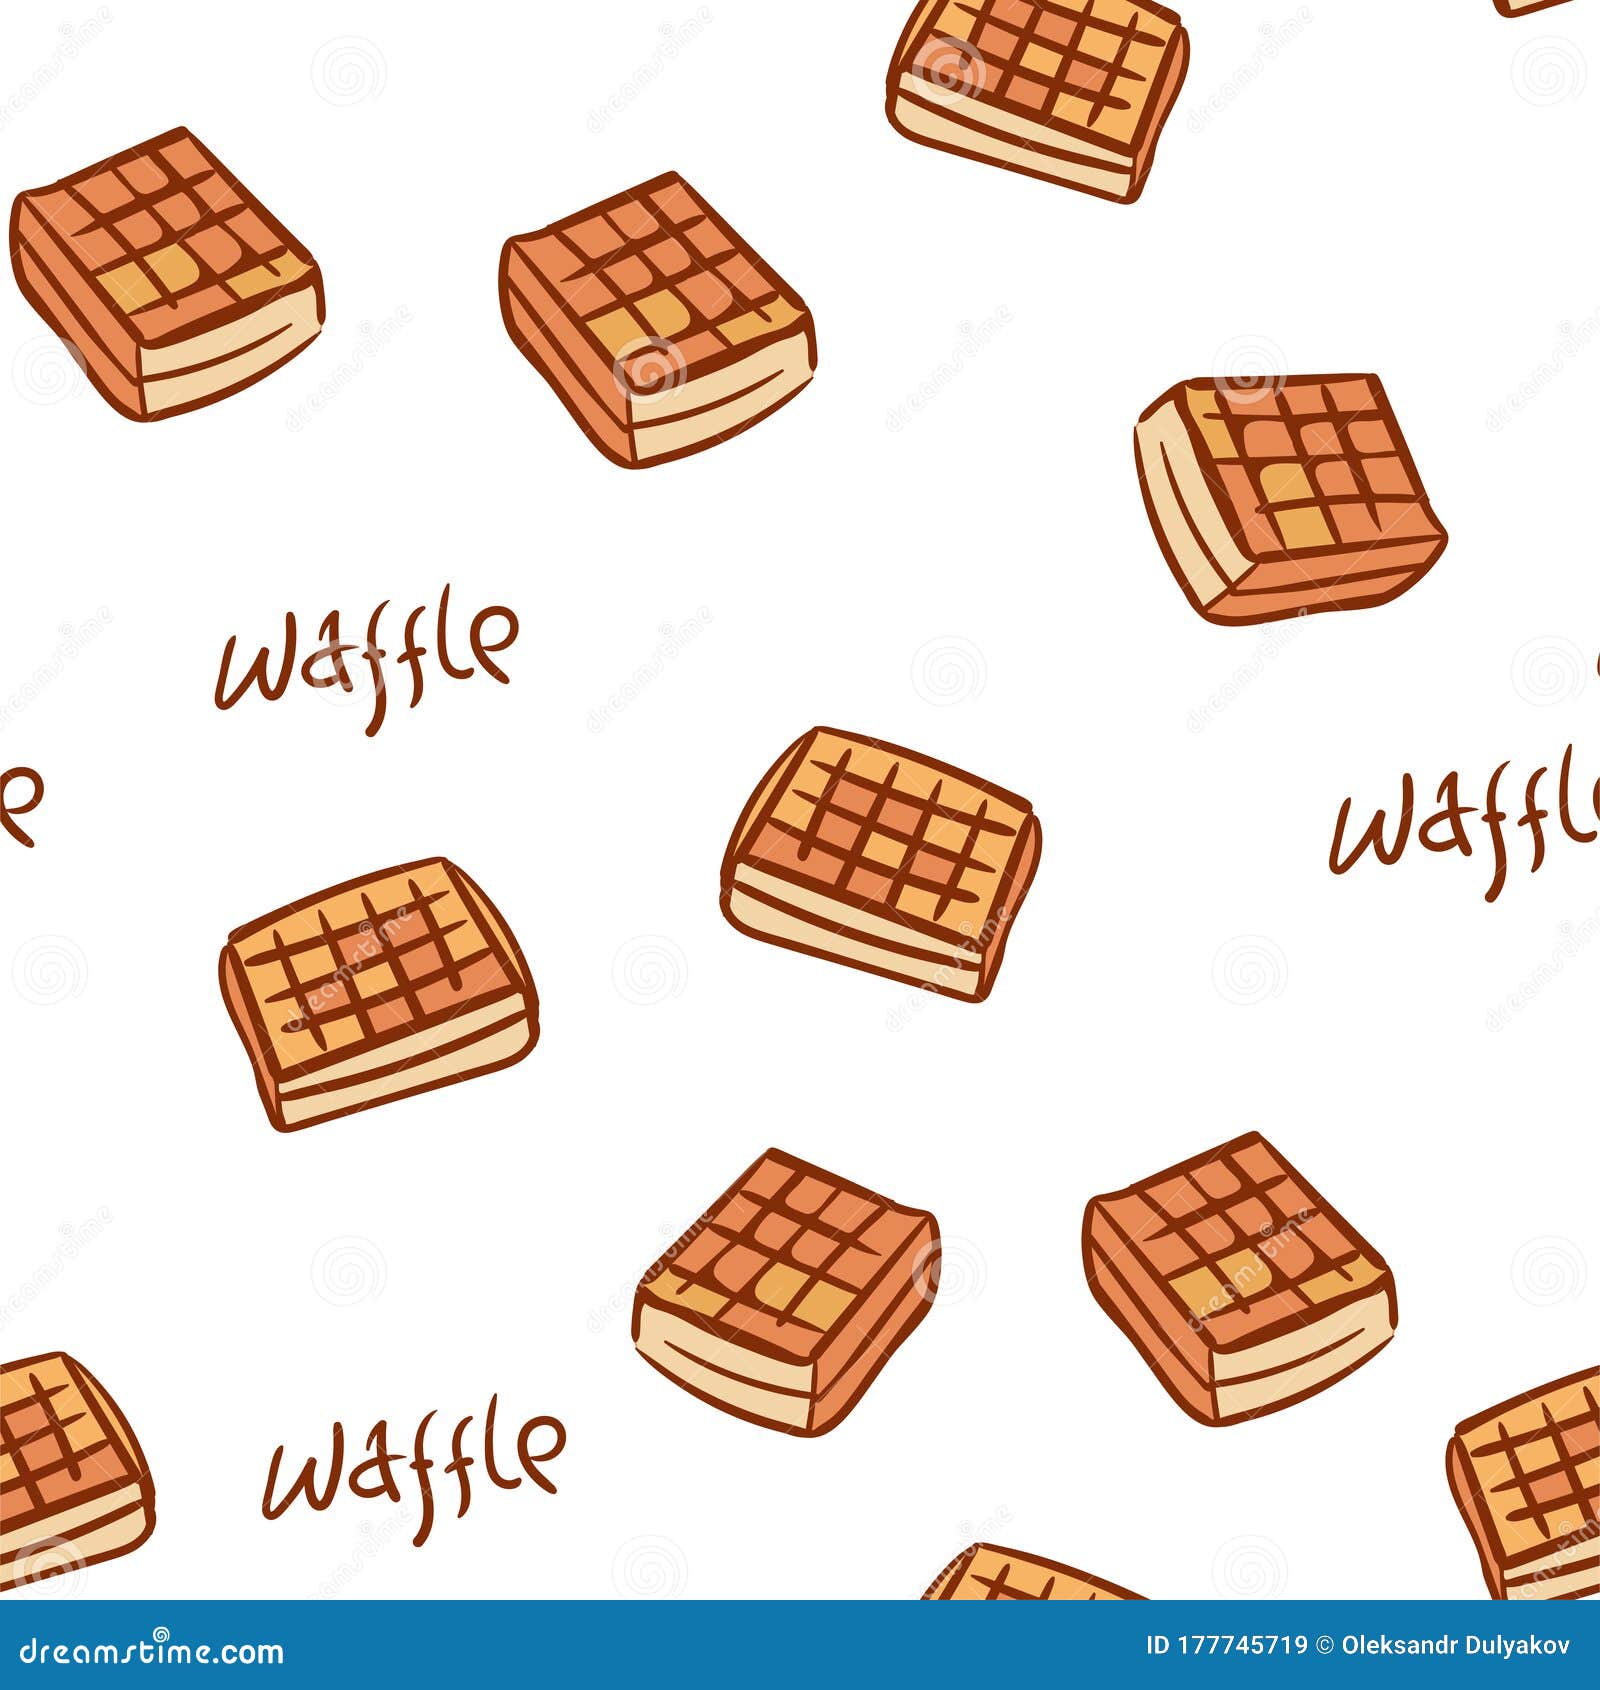 Waffles Seamless Pattern Background Wallpaper Stock Vector Royalty Free  1600200151  Shutterstock